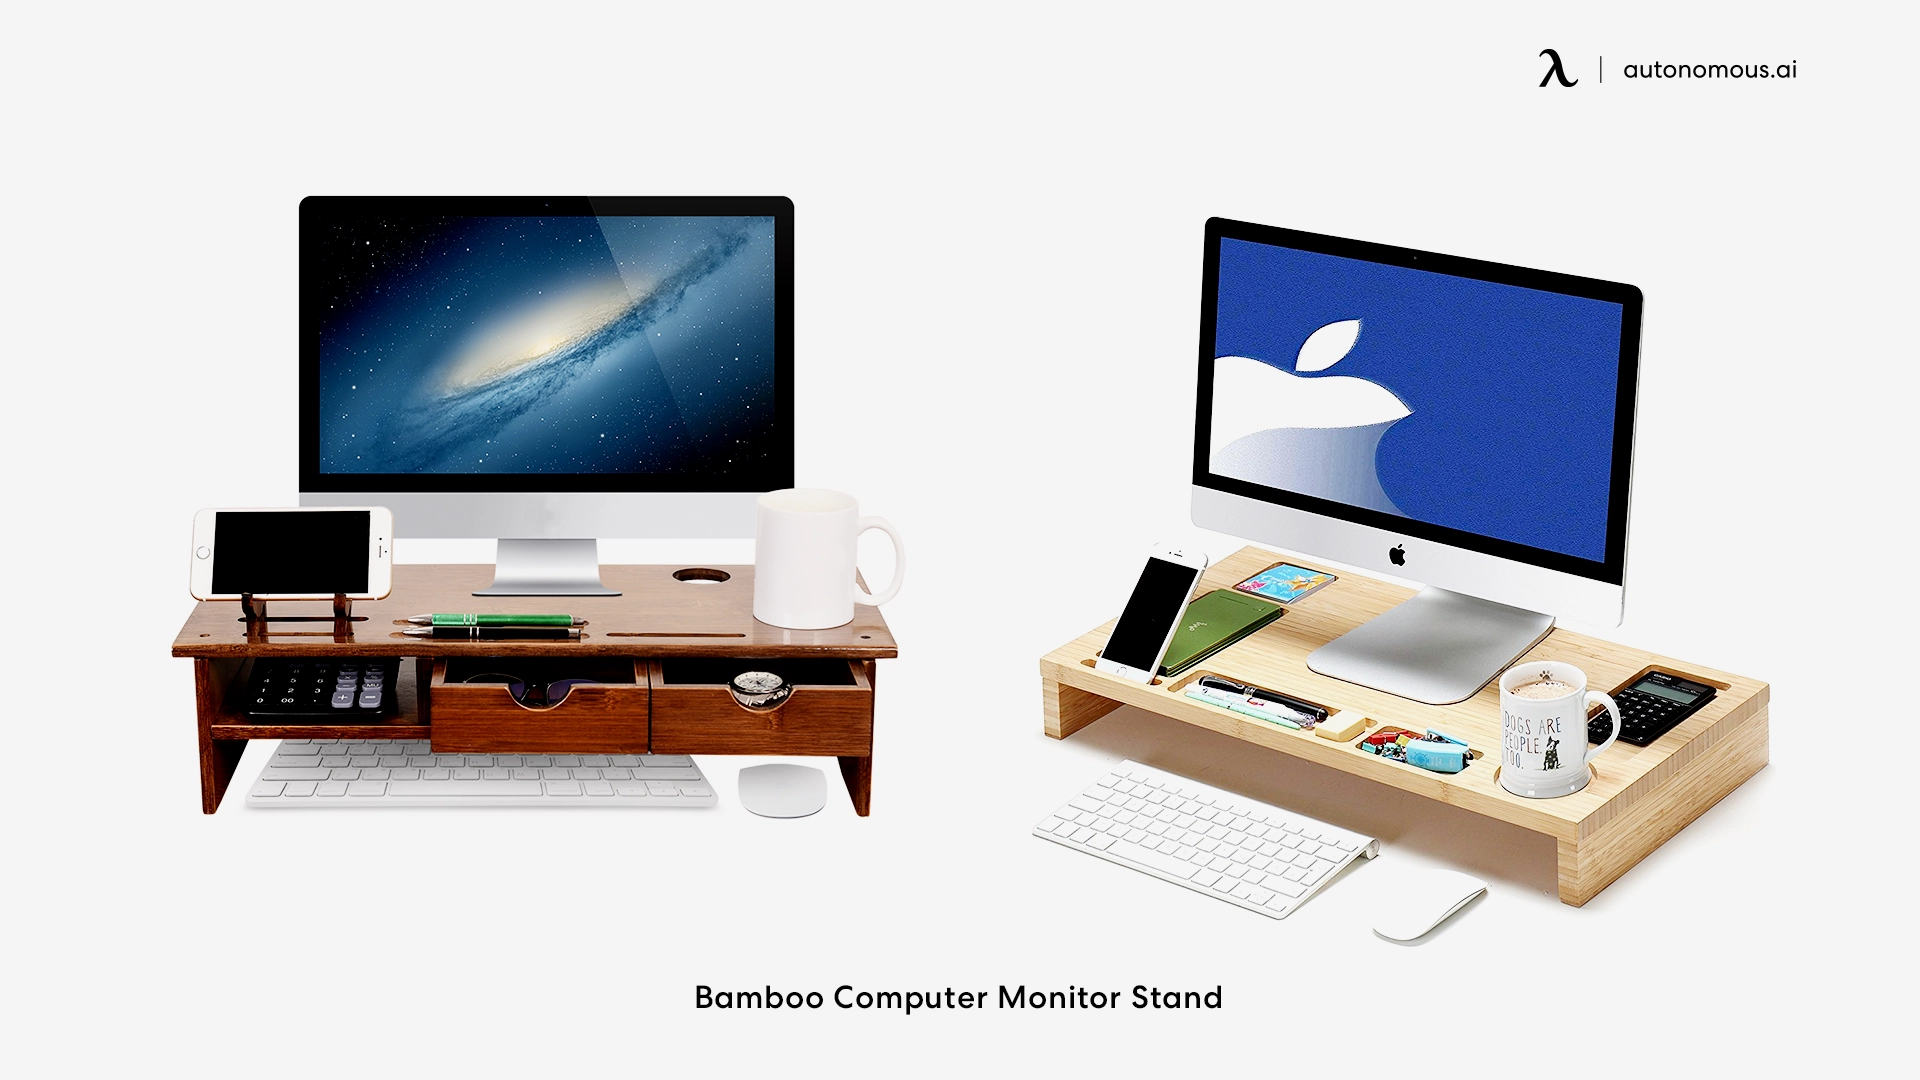 Bamboo Computer Monitor Stand